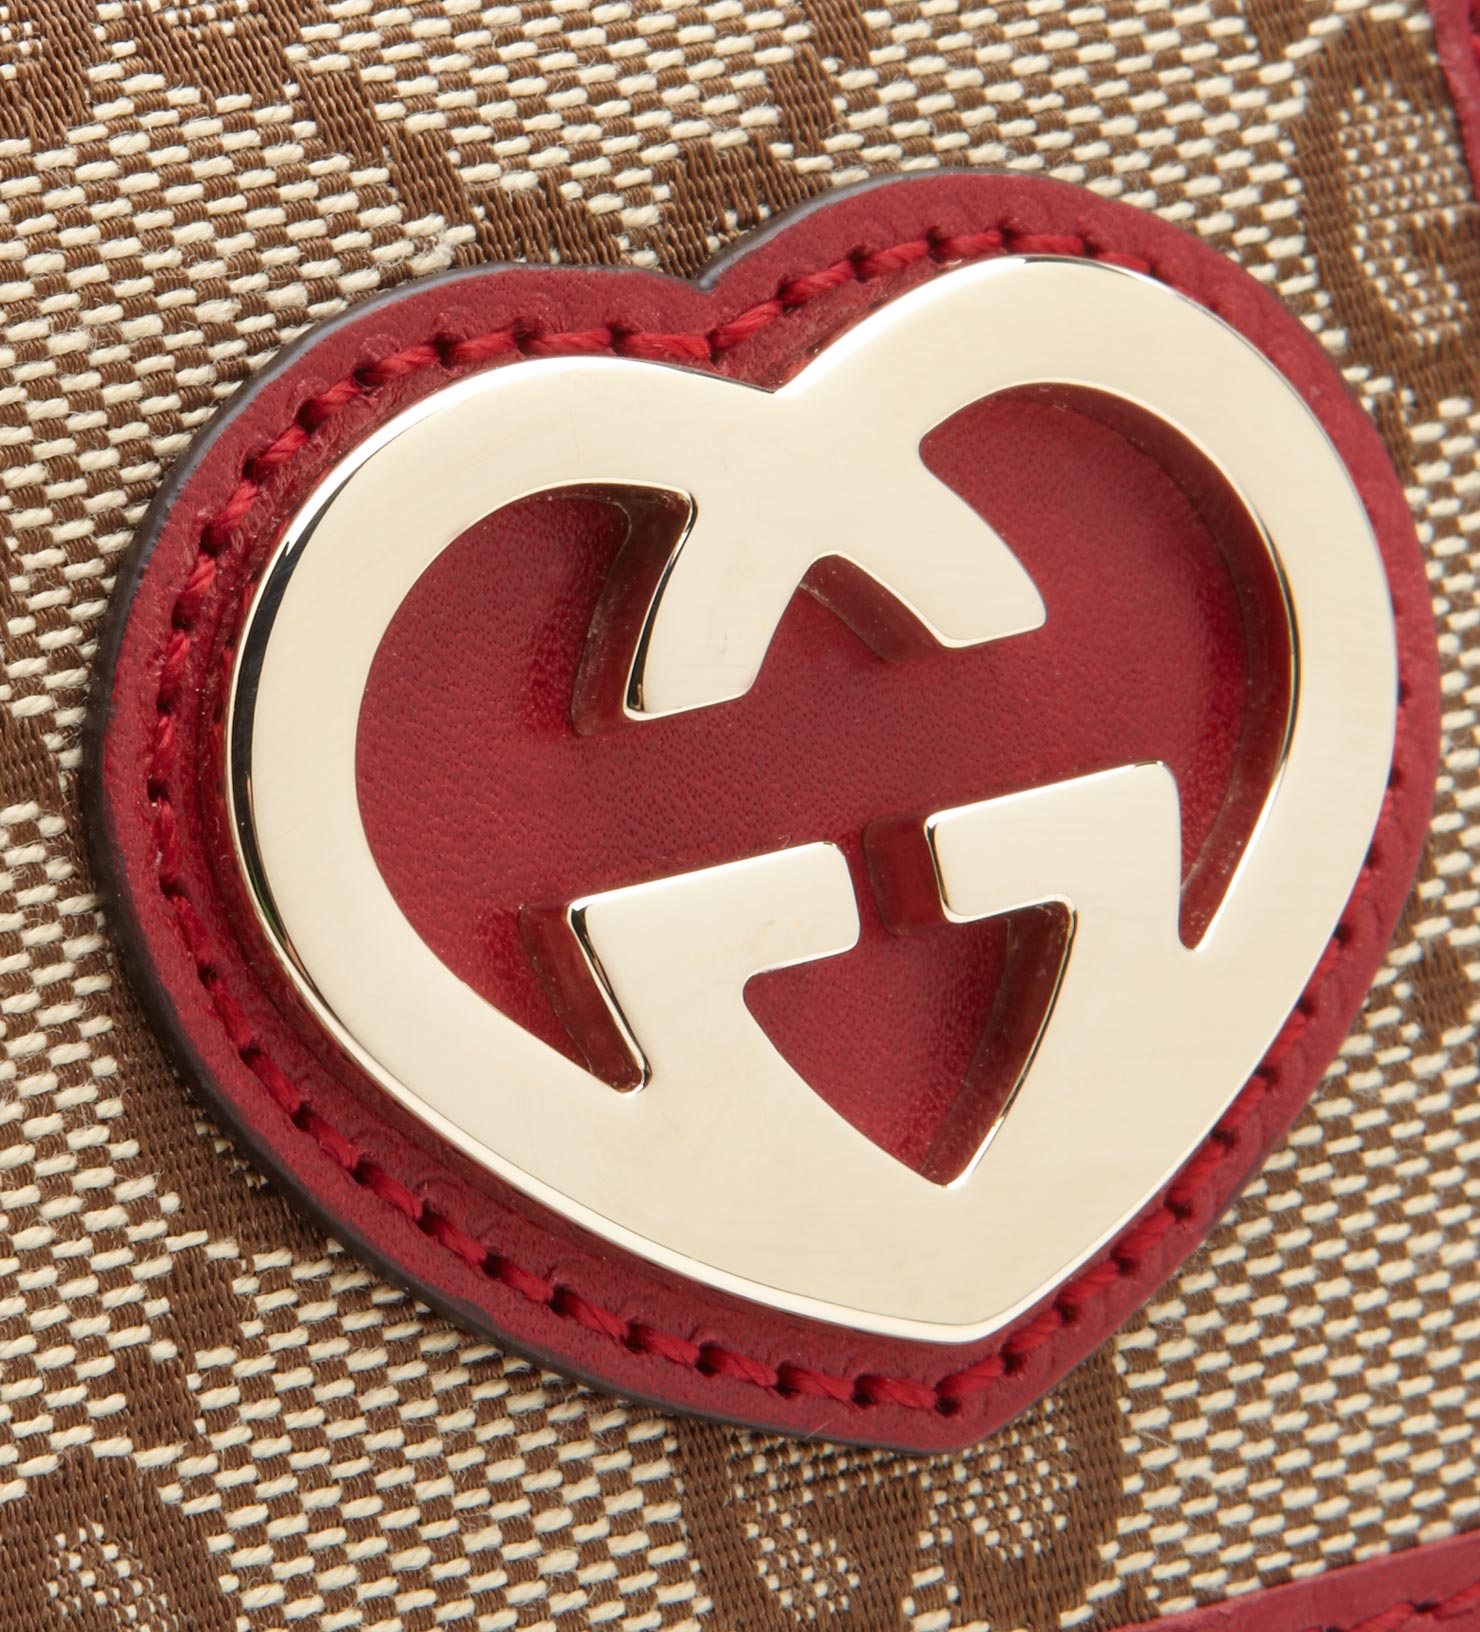 Lyst - Gucci Heart-Shaped Interlocking G Continental ...